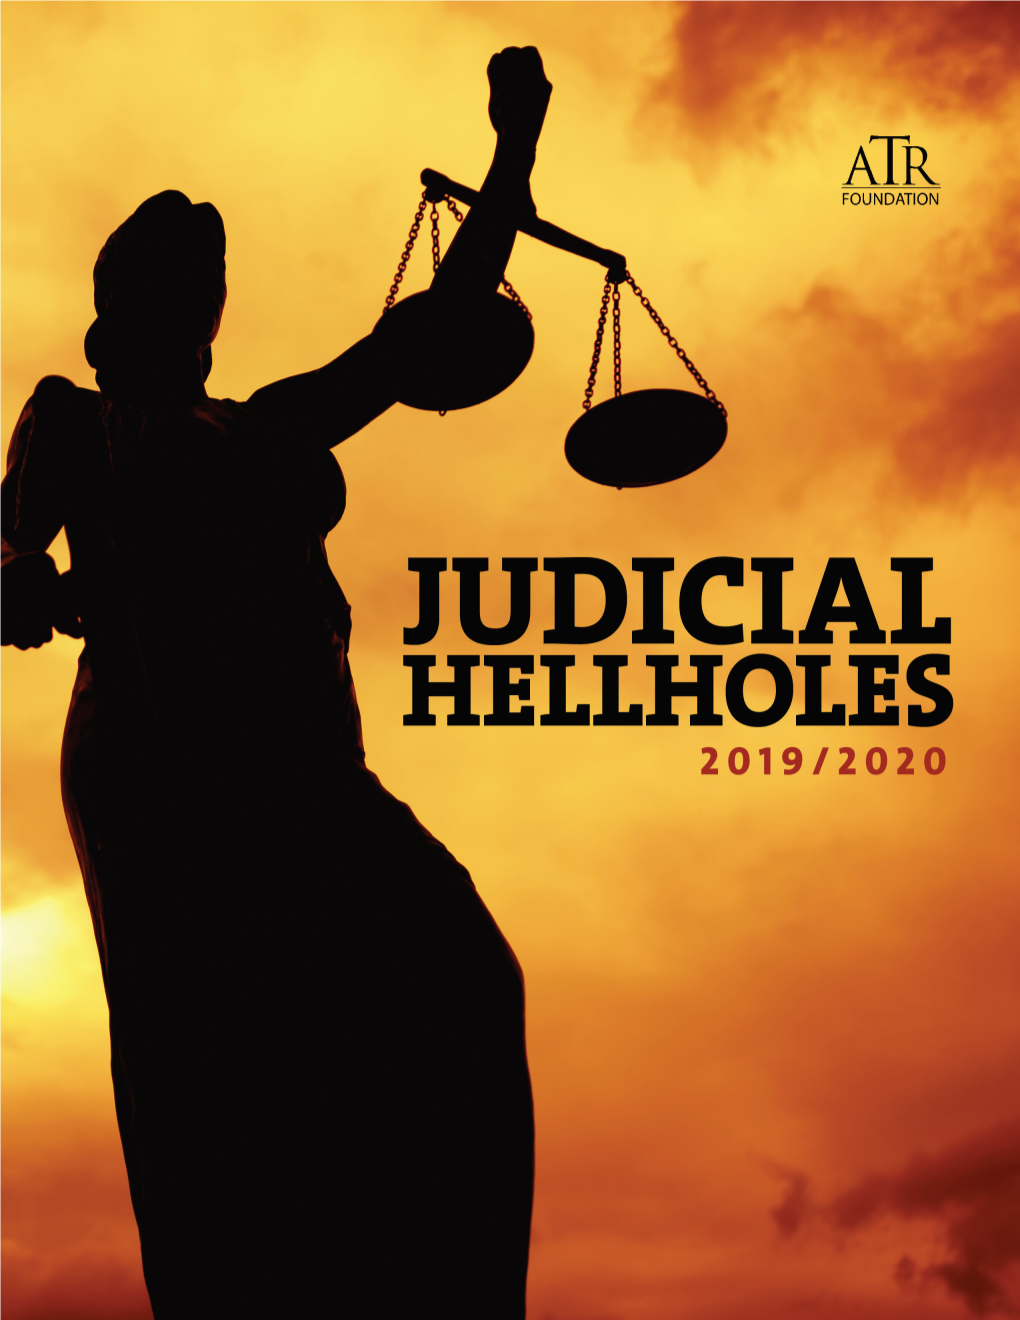 2019 – 2020 Judicial Hellholes Report Shines Its Brightest Spotlight on 10 Jurisdictions, Courts Or Legisla- Tures That Have Earned Reputations As Judicial Hellholes